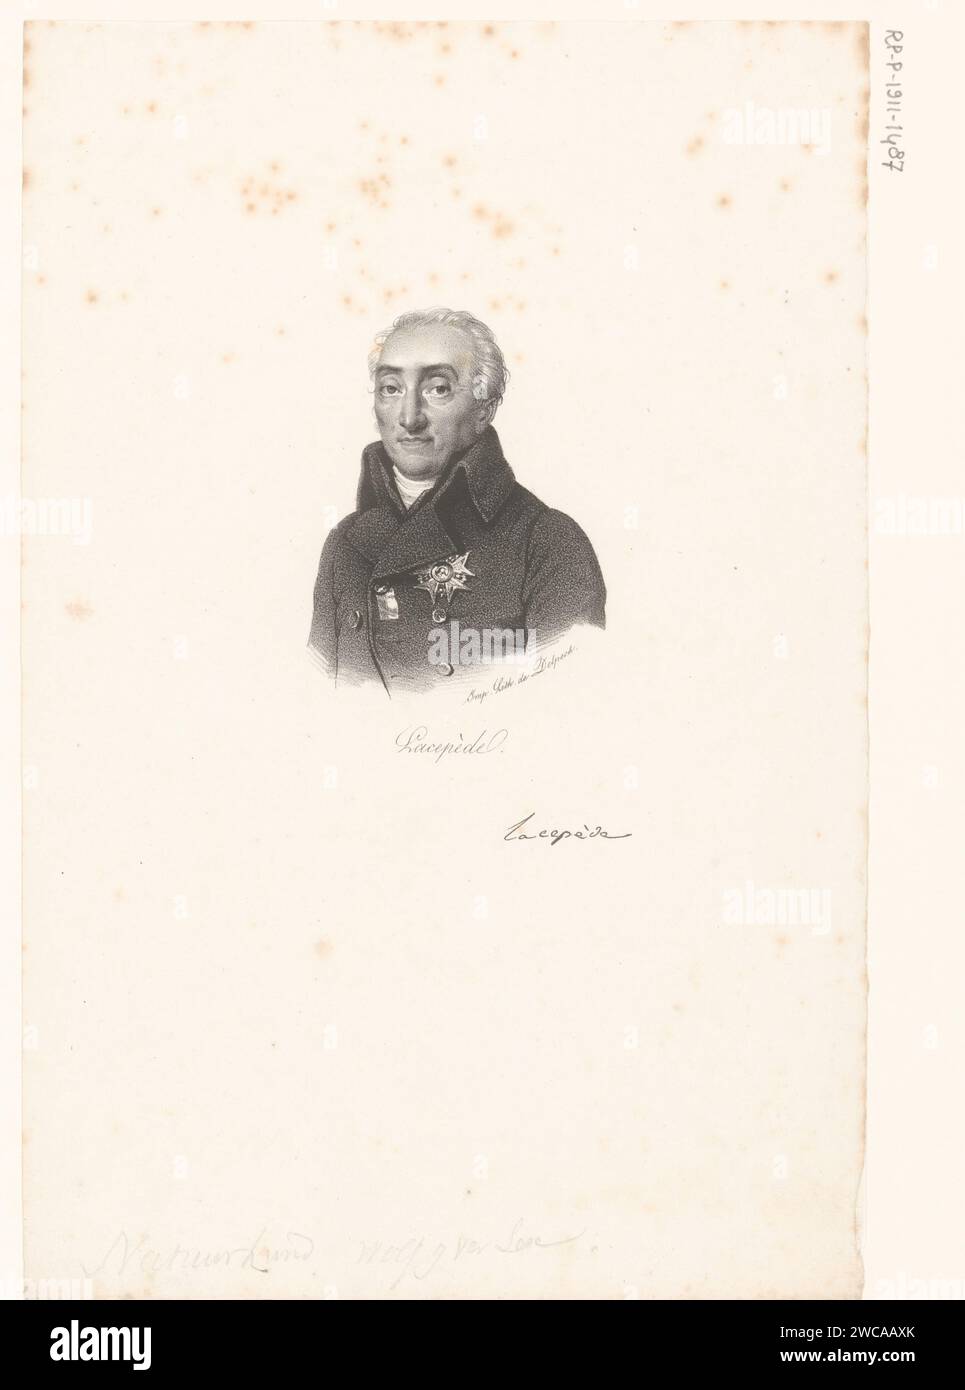 Portret van Bernard-Germain de Lacépède, anónimo, veuve Delpech (Naudet), en o después de 1818 - en o antes de 1842 imprimir París personas históricas de papel Foto de stock